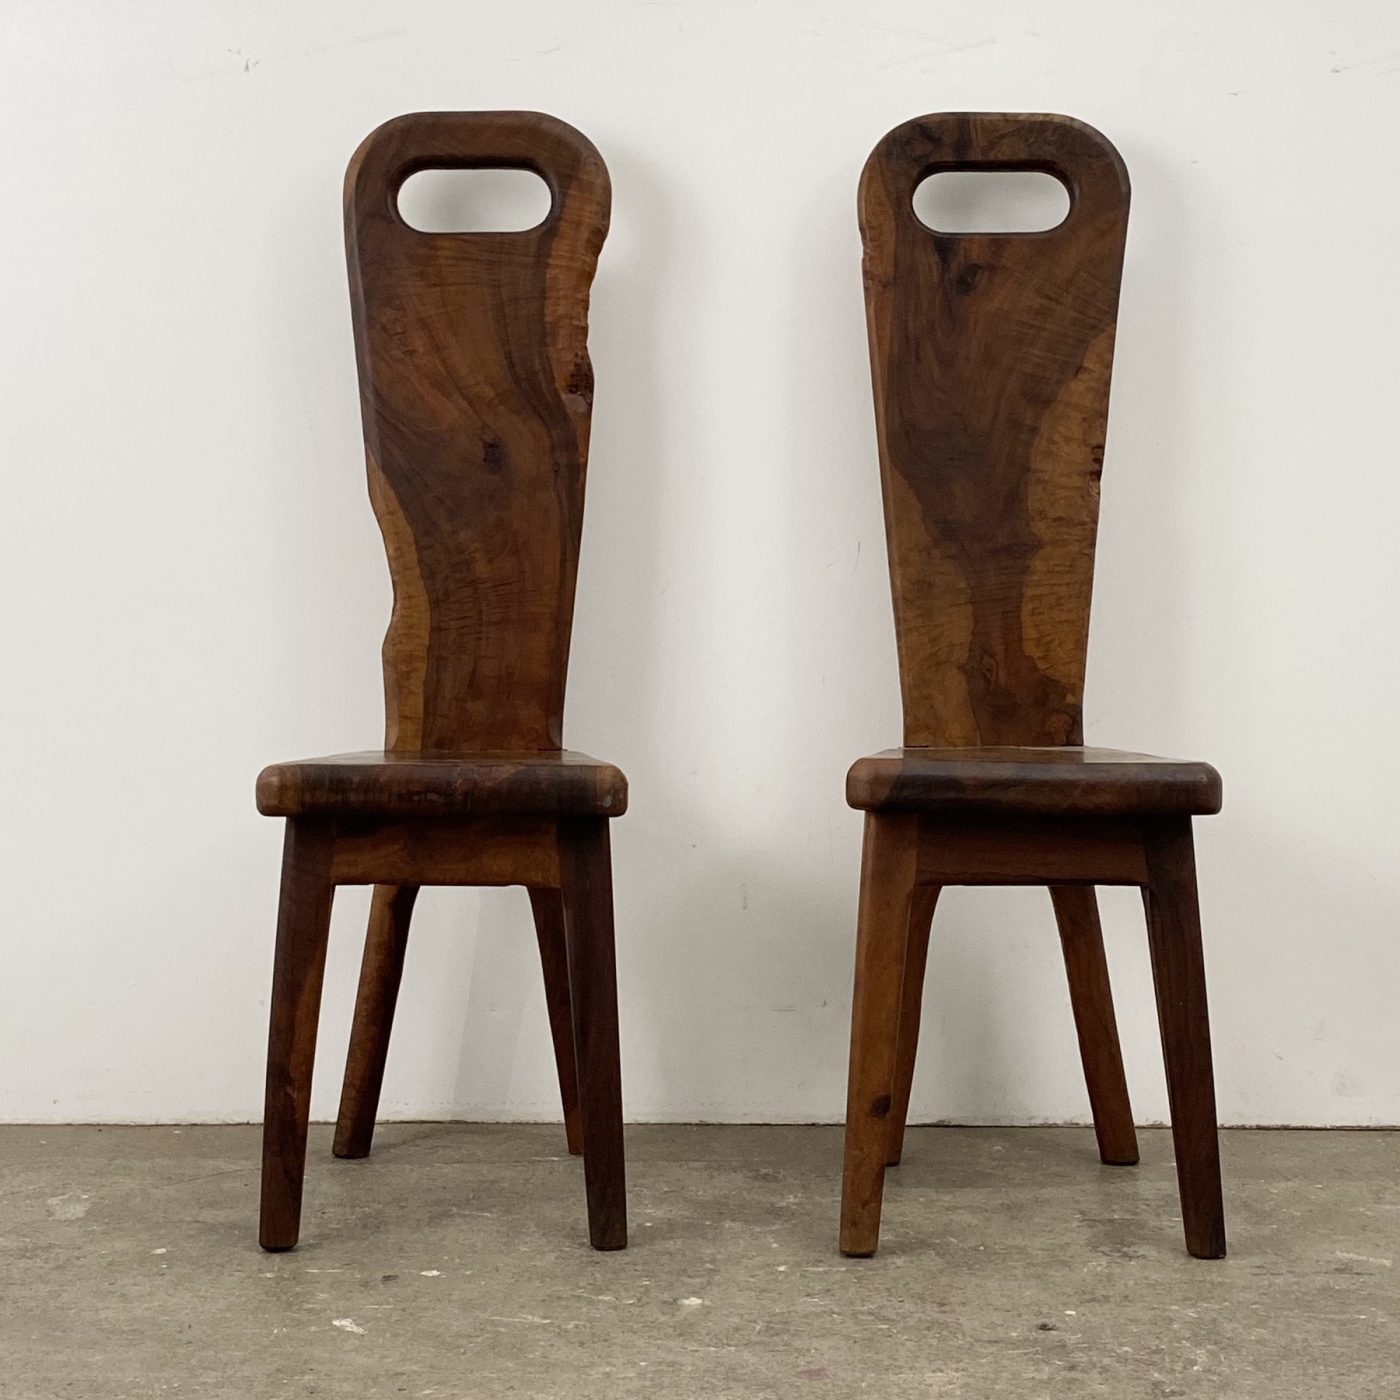 objet-vagabond-olive-chairs0004